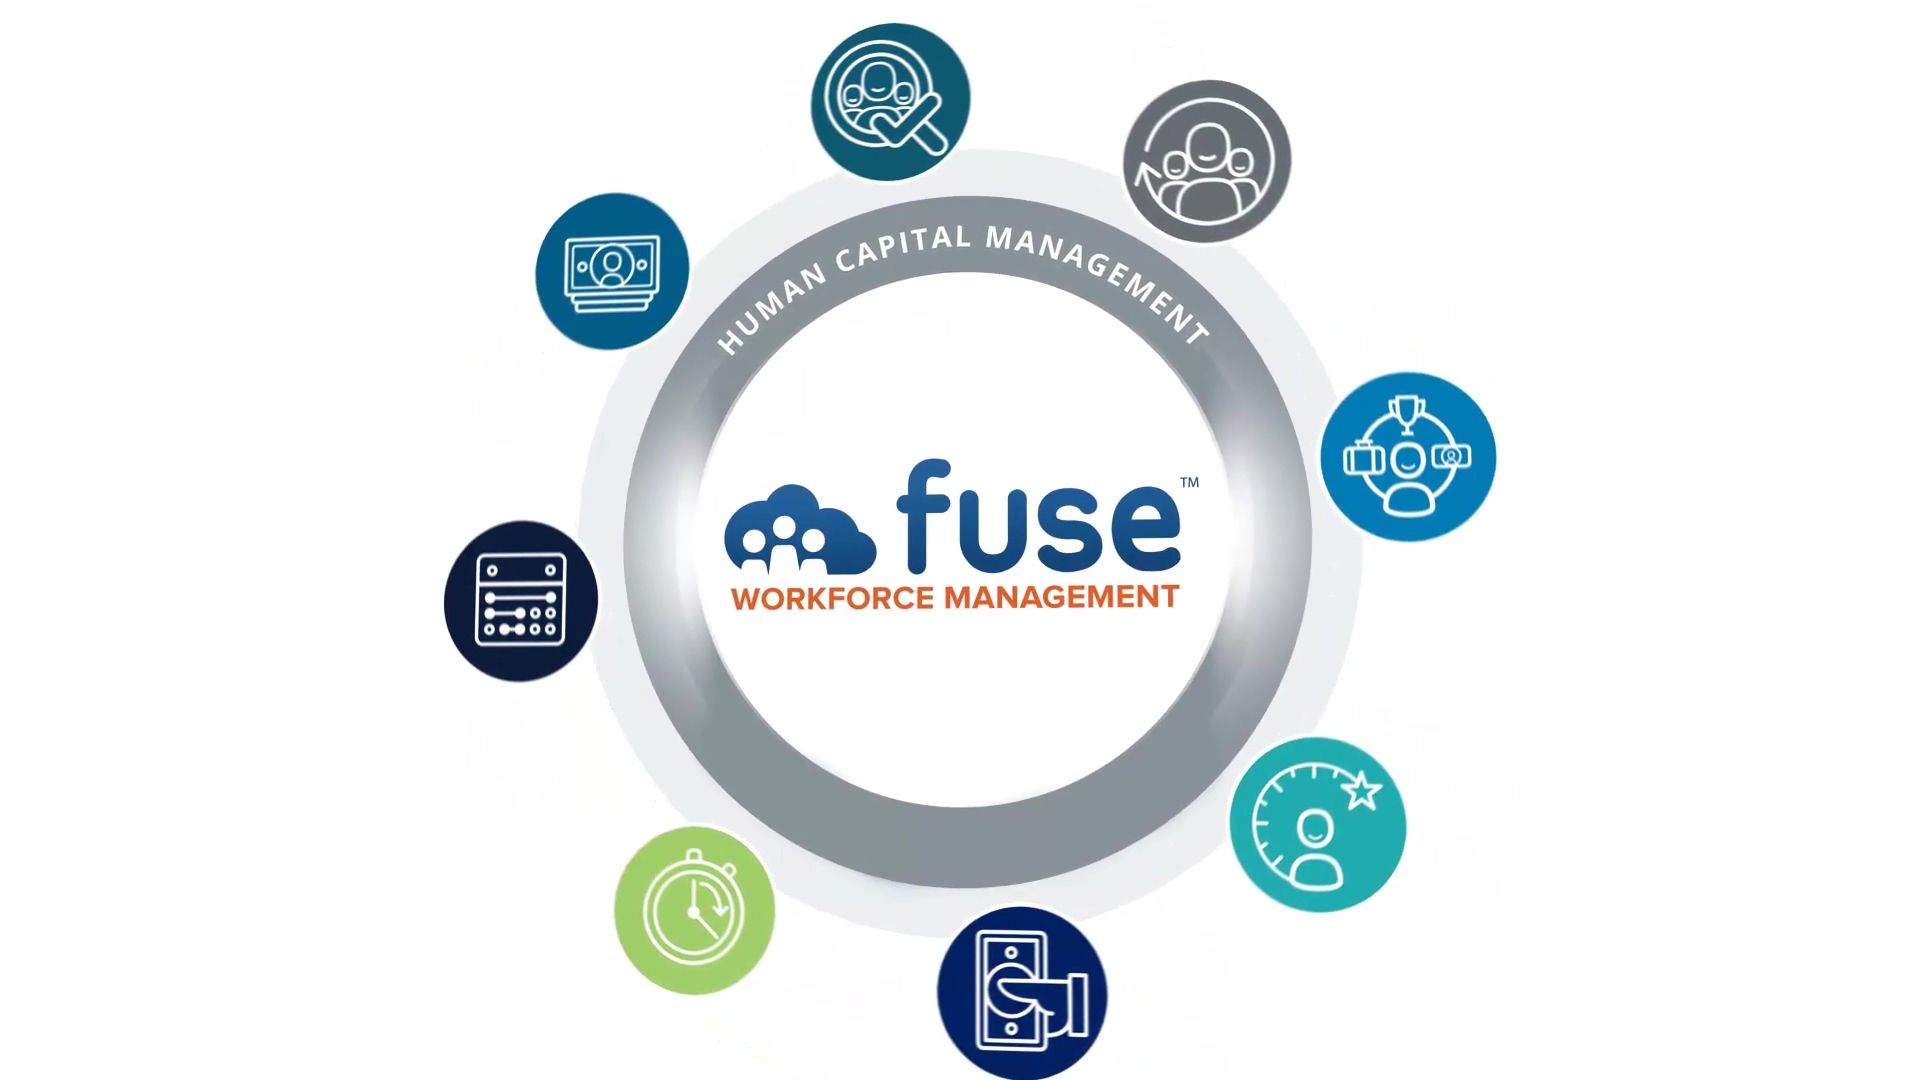 fuse workforce management